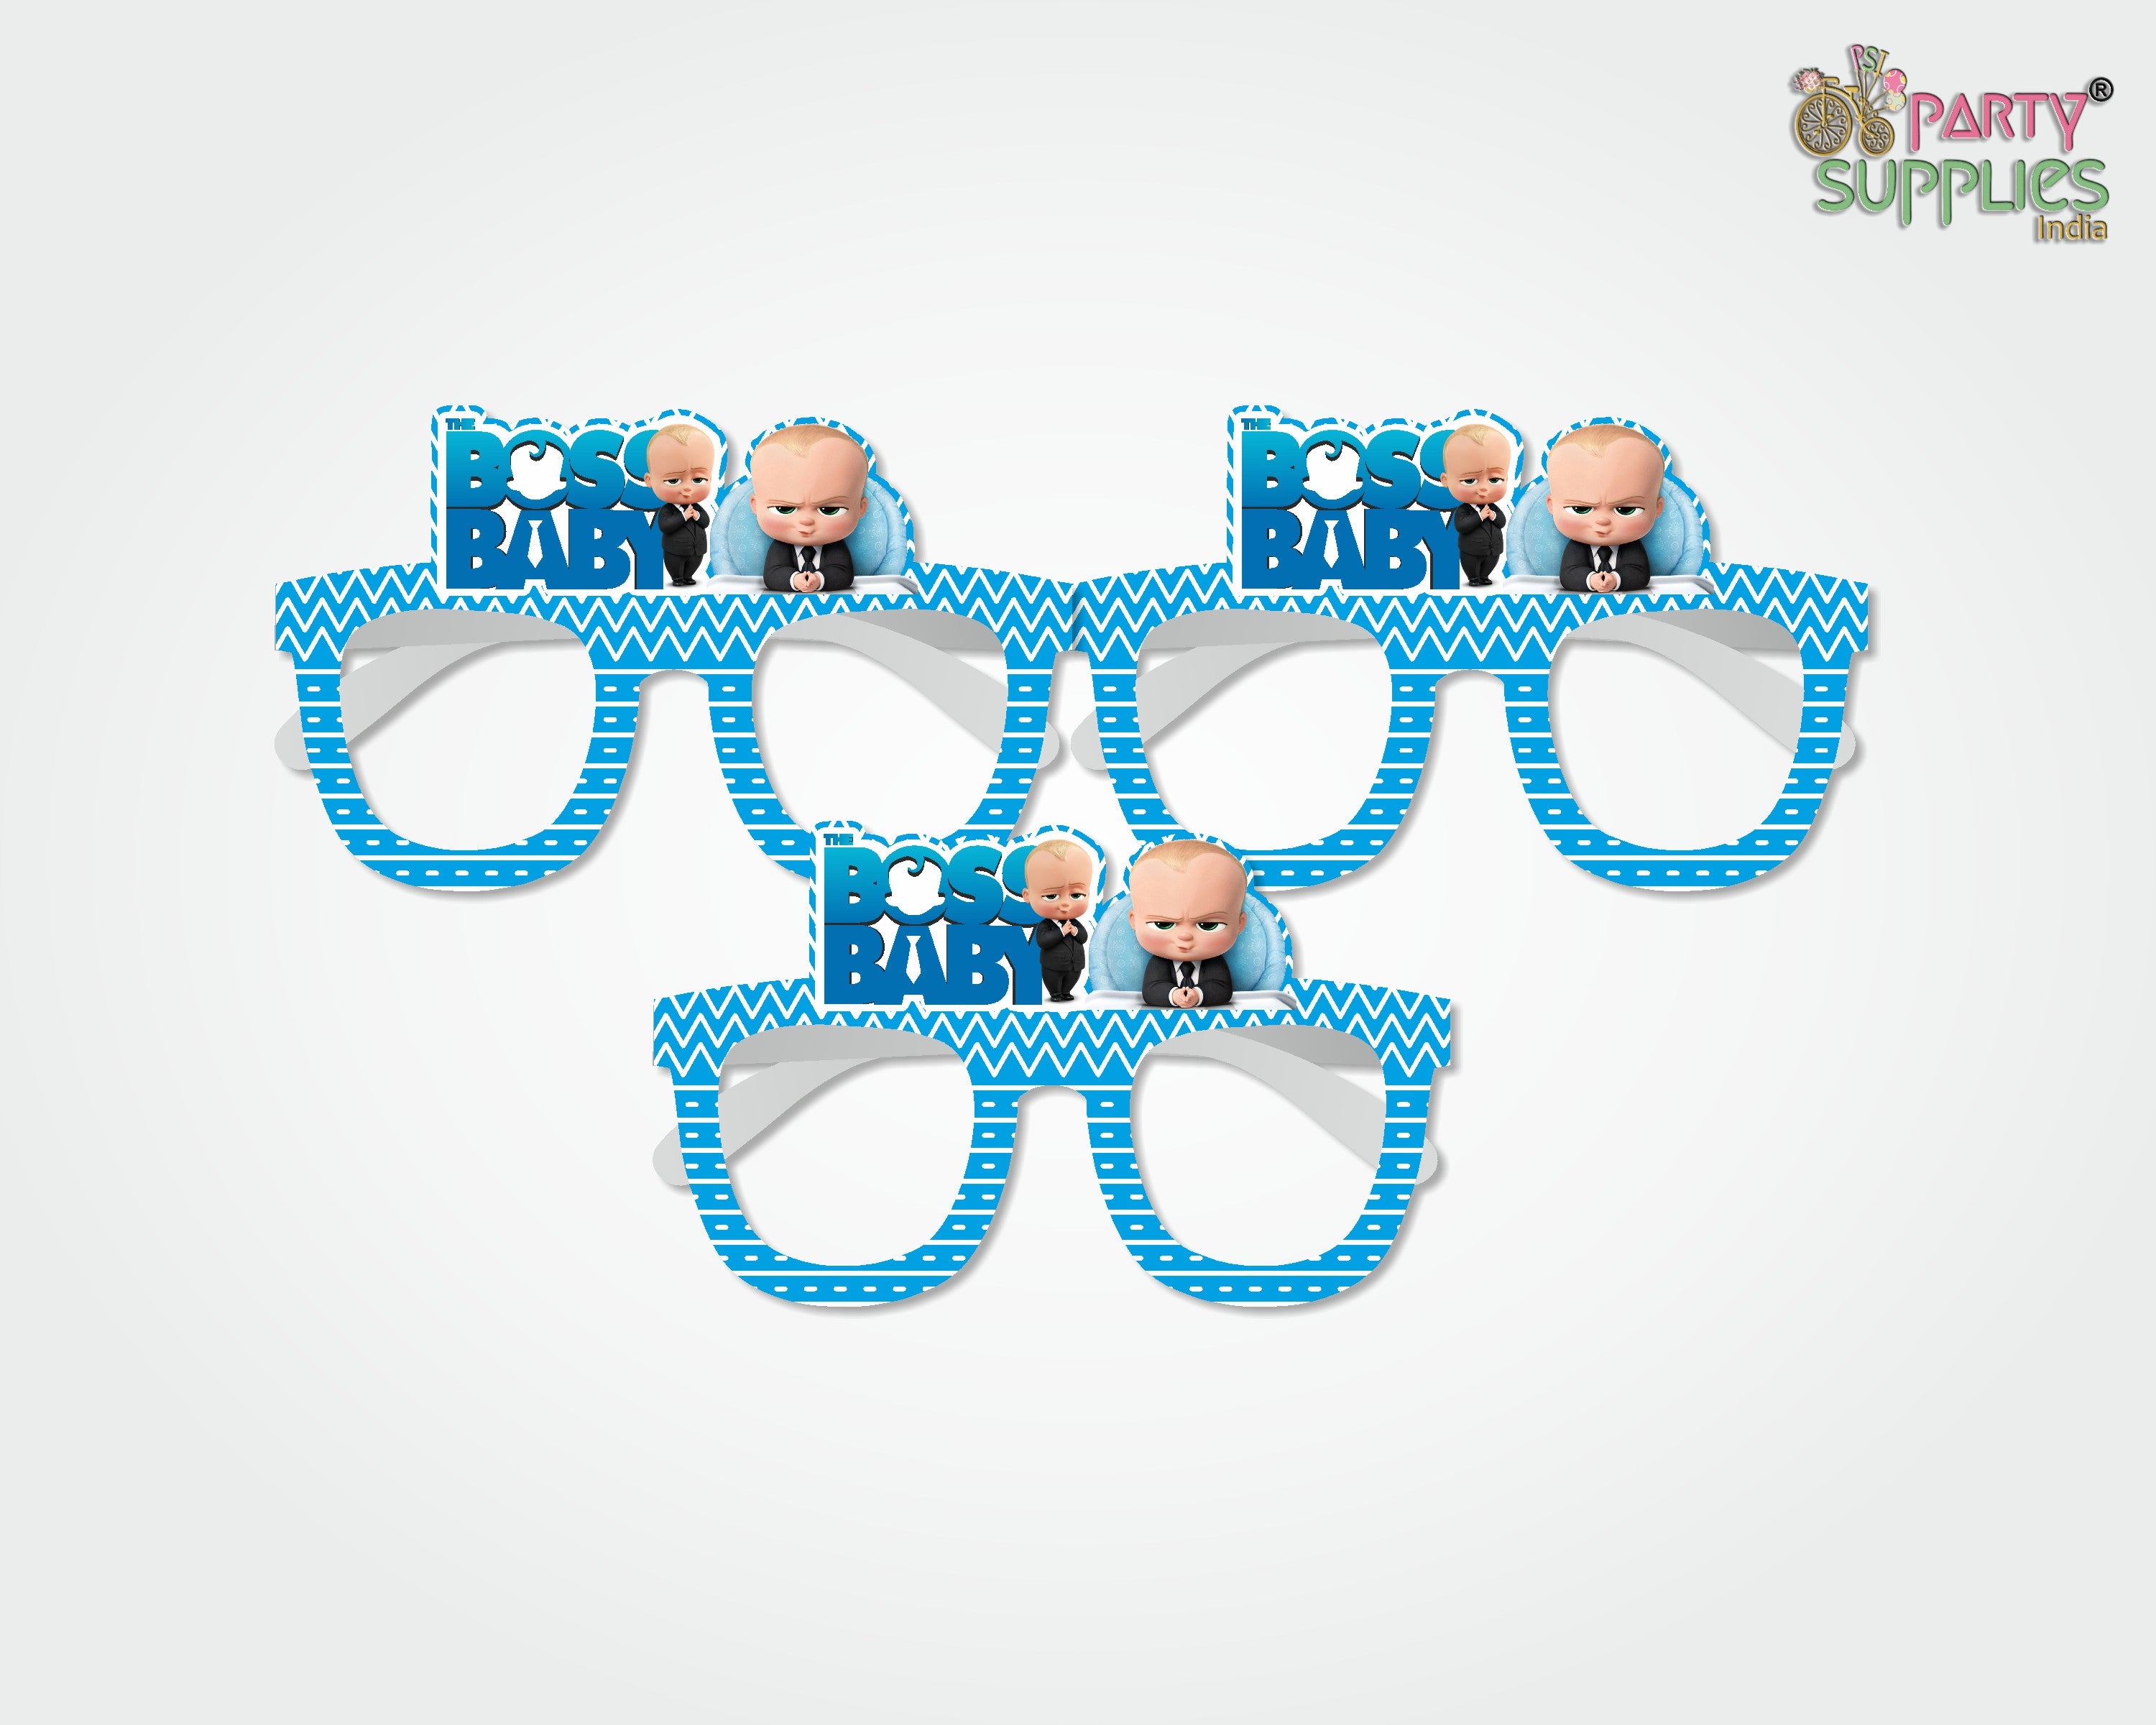 PSI Boss Baby theme Birthday Party glasses